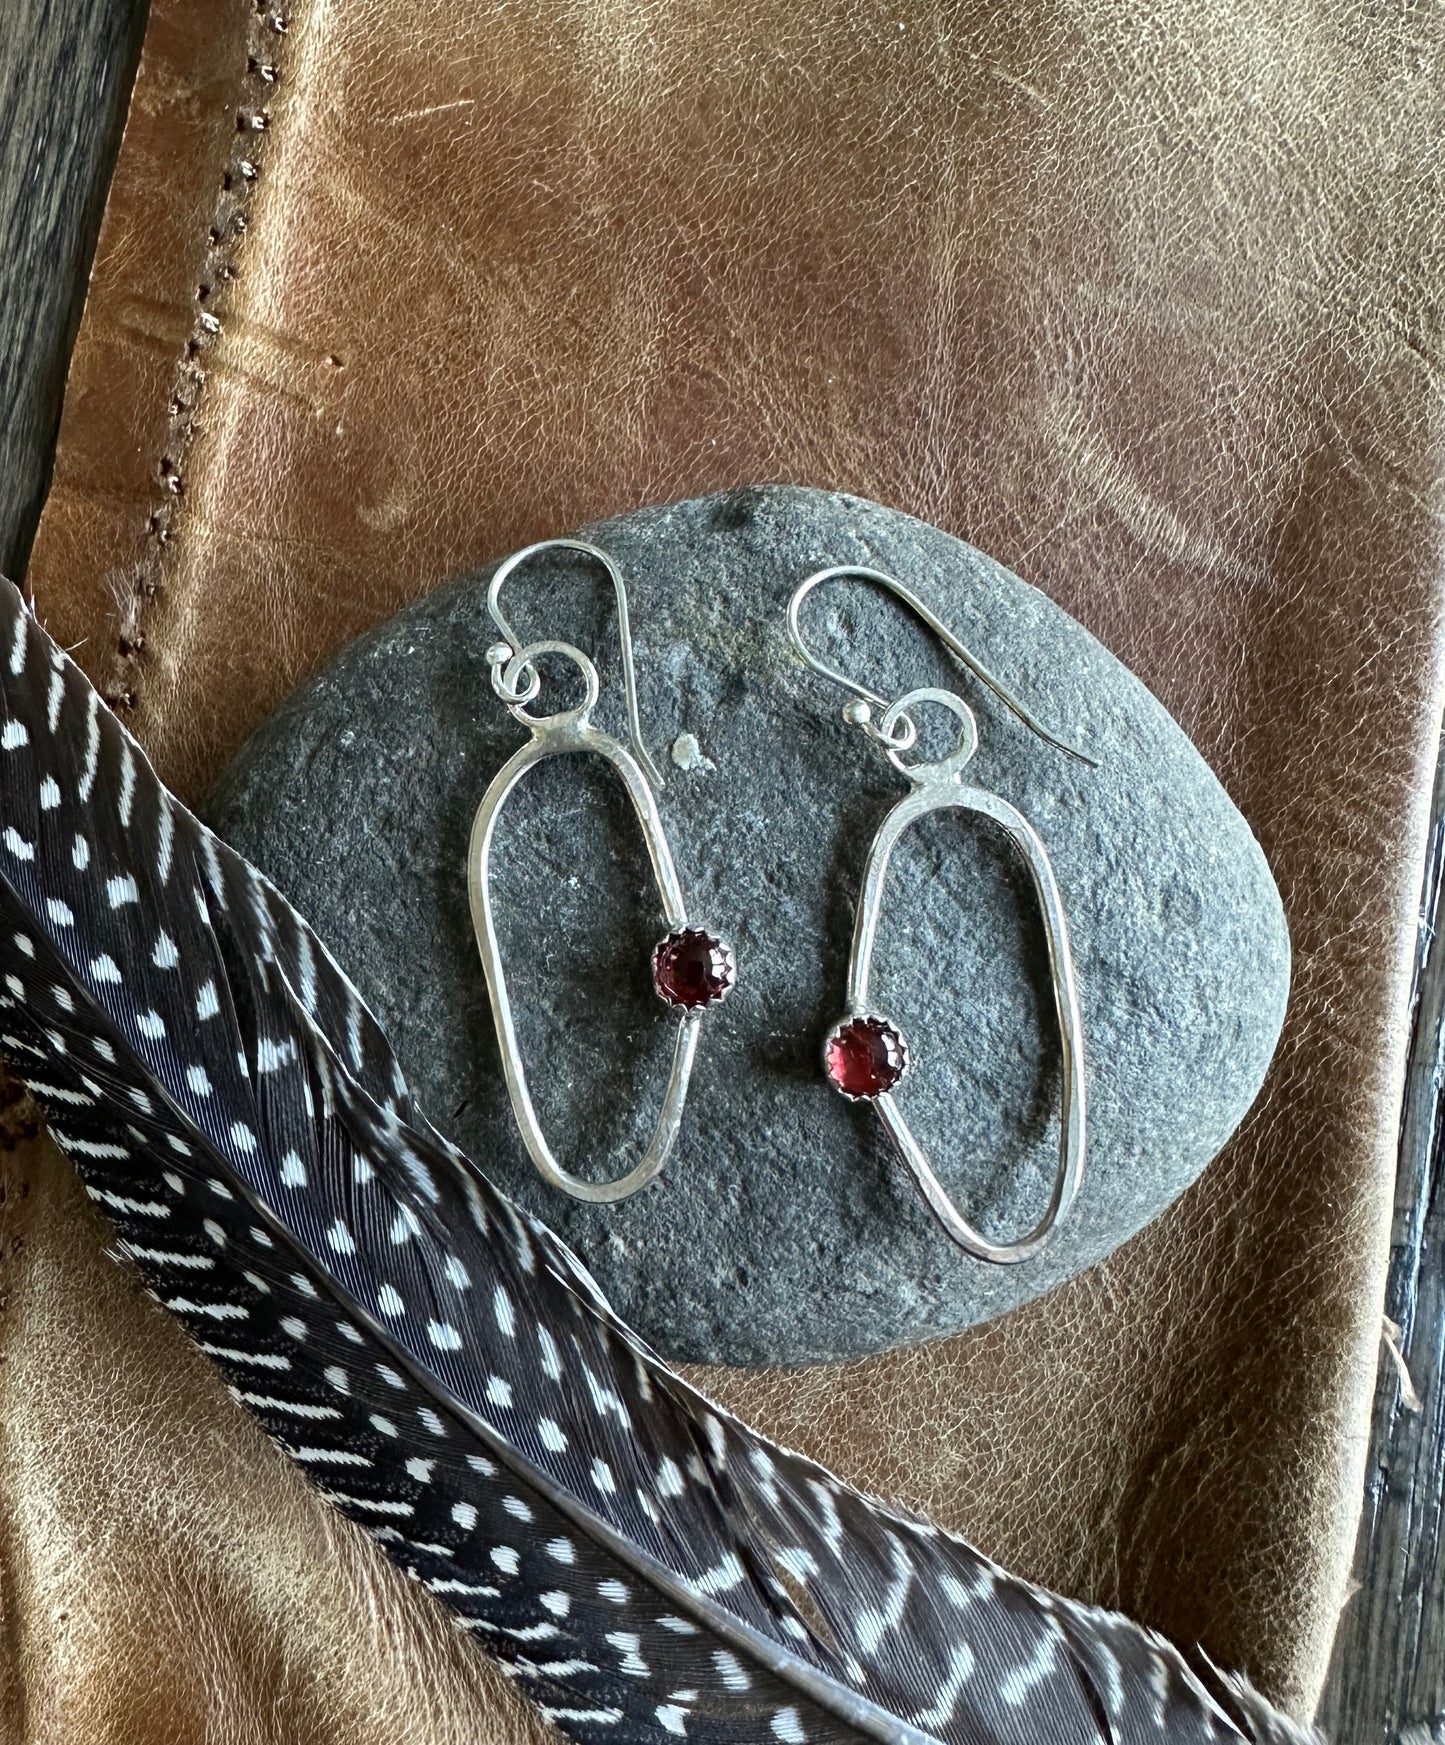 Organic Oval Earrings with Garnet Stones